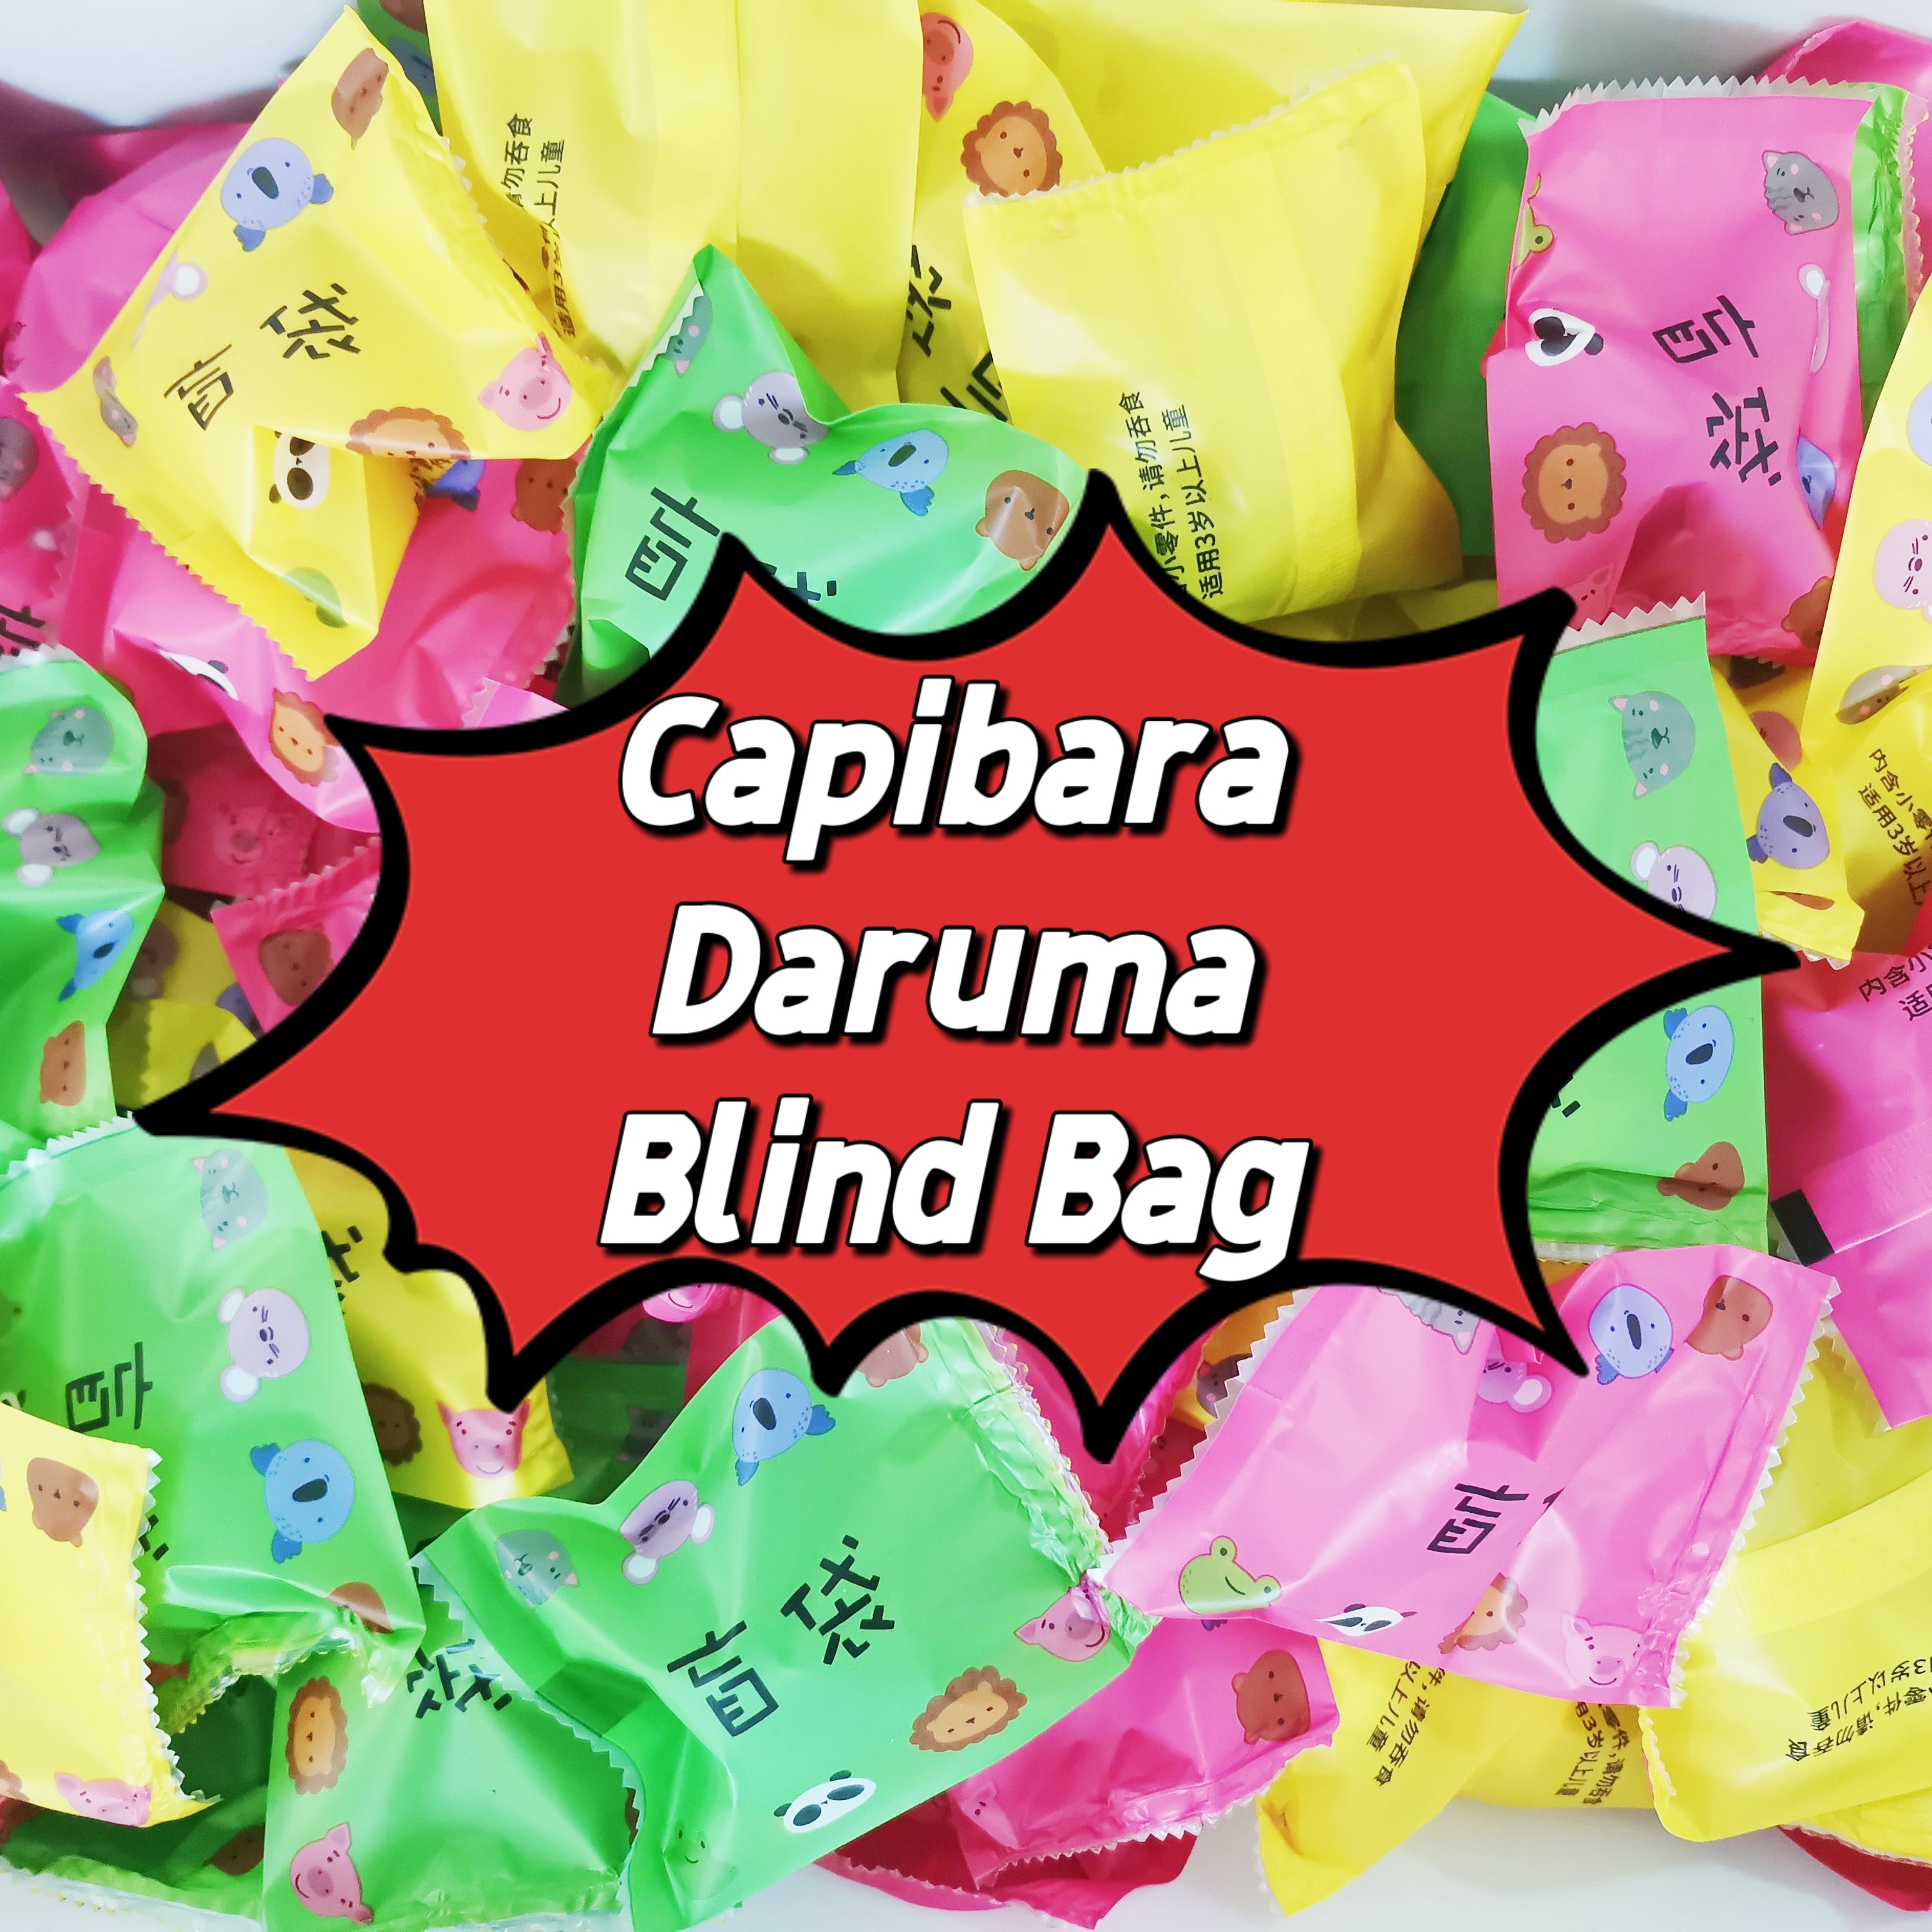 Capibara Daruma Blind Bag DingDing Bag-Open in Livestream